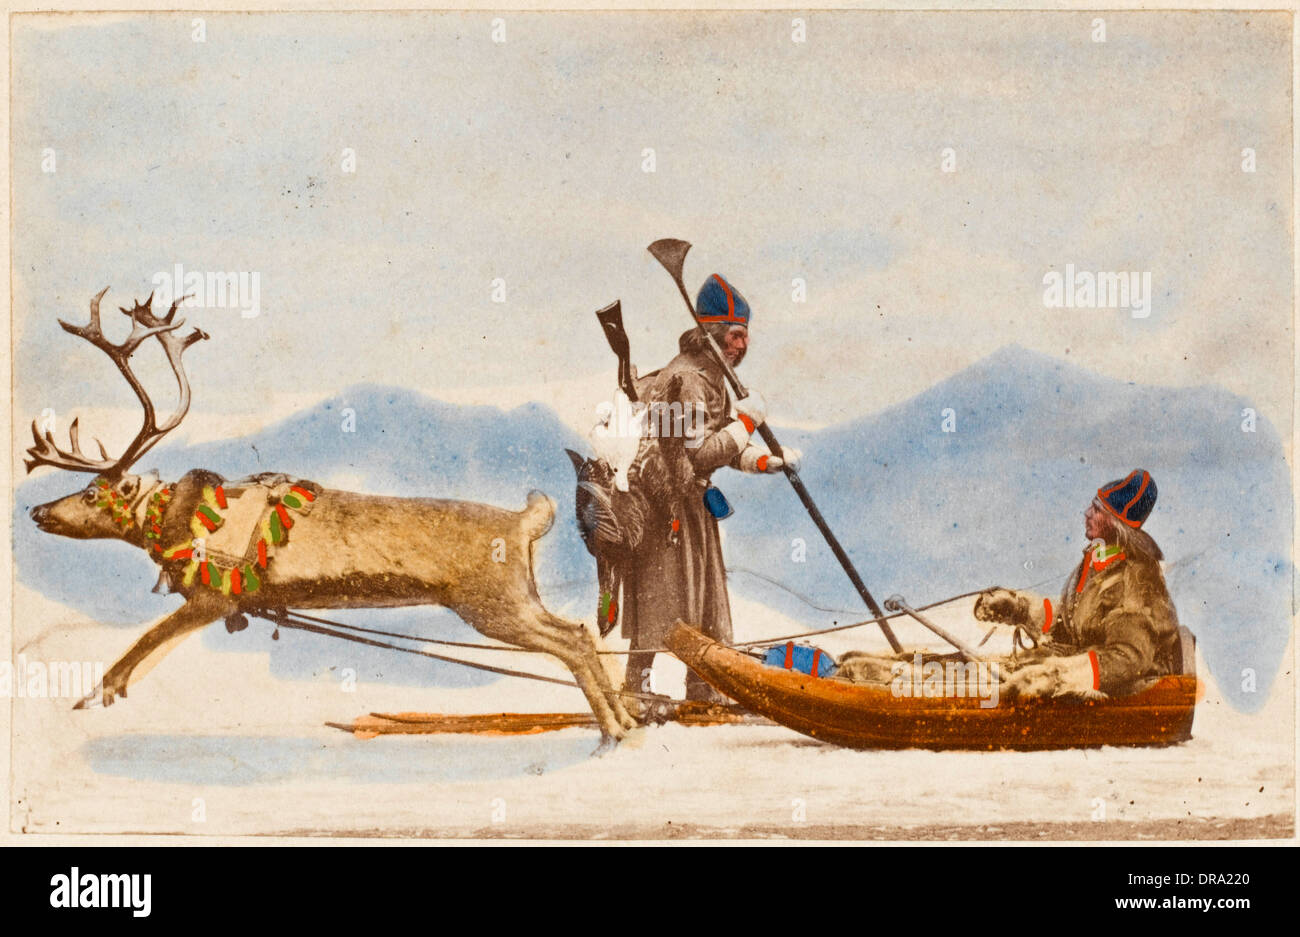 Sami People - Early Photograph Stock Photo